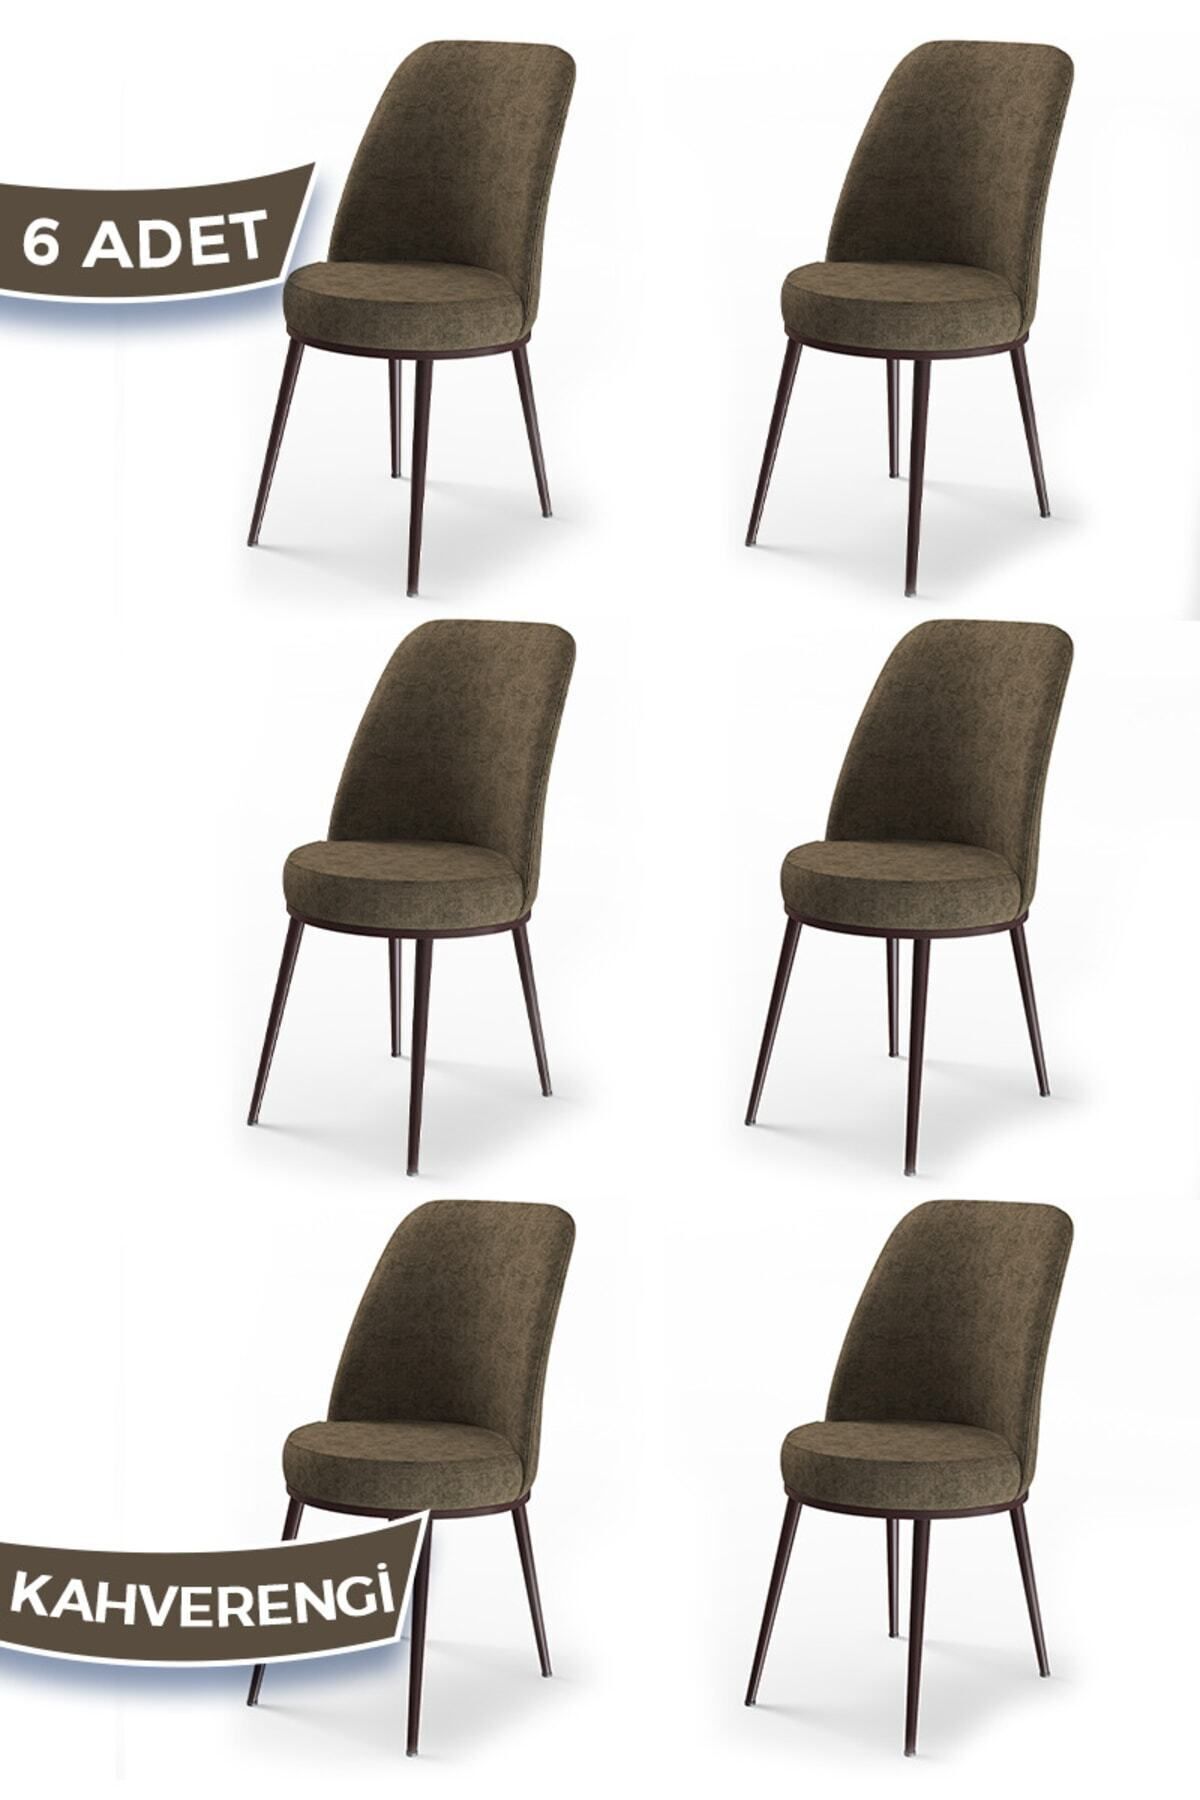 Canisa Concept Dexa Serisi Kahverengi Renk 6 Adet Sandalye, Renk Kahverengi, Ayaklar Kahverengi